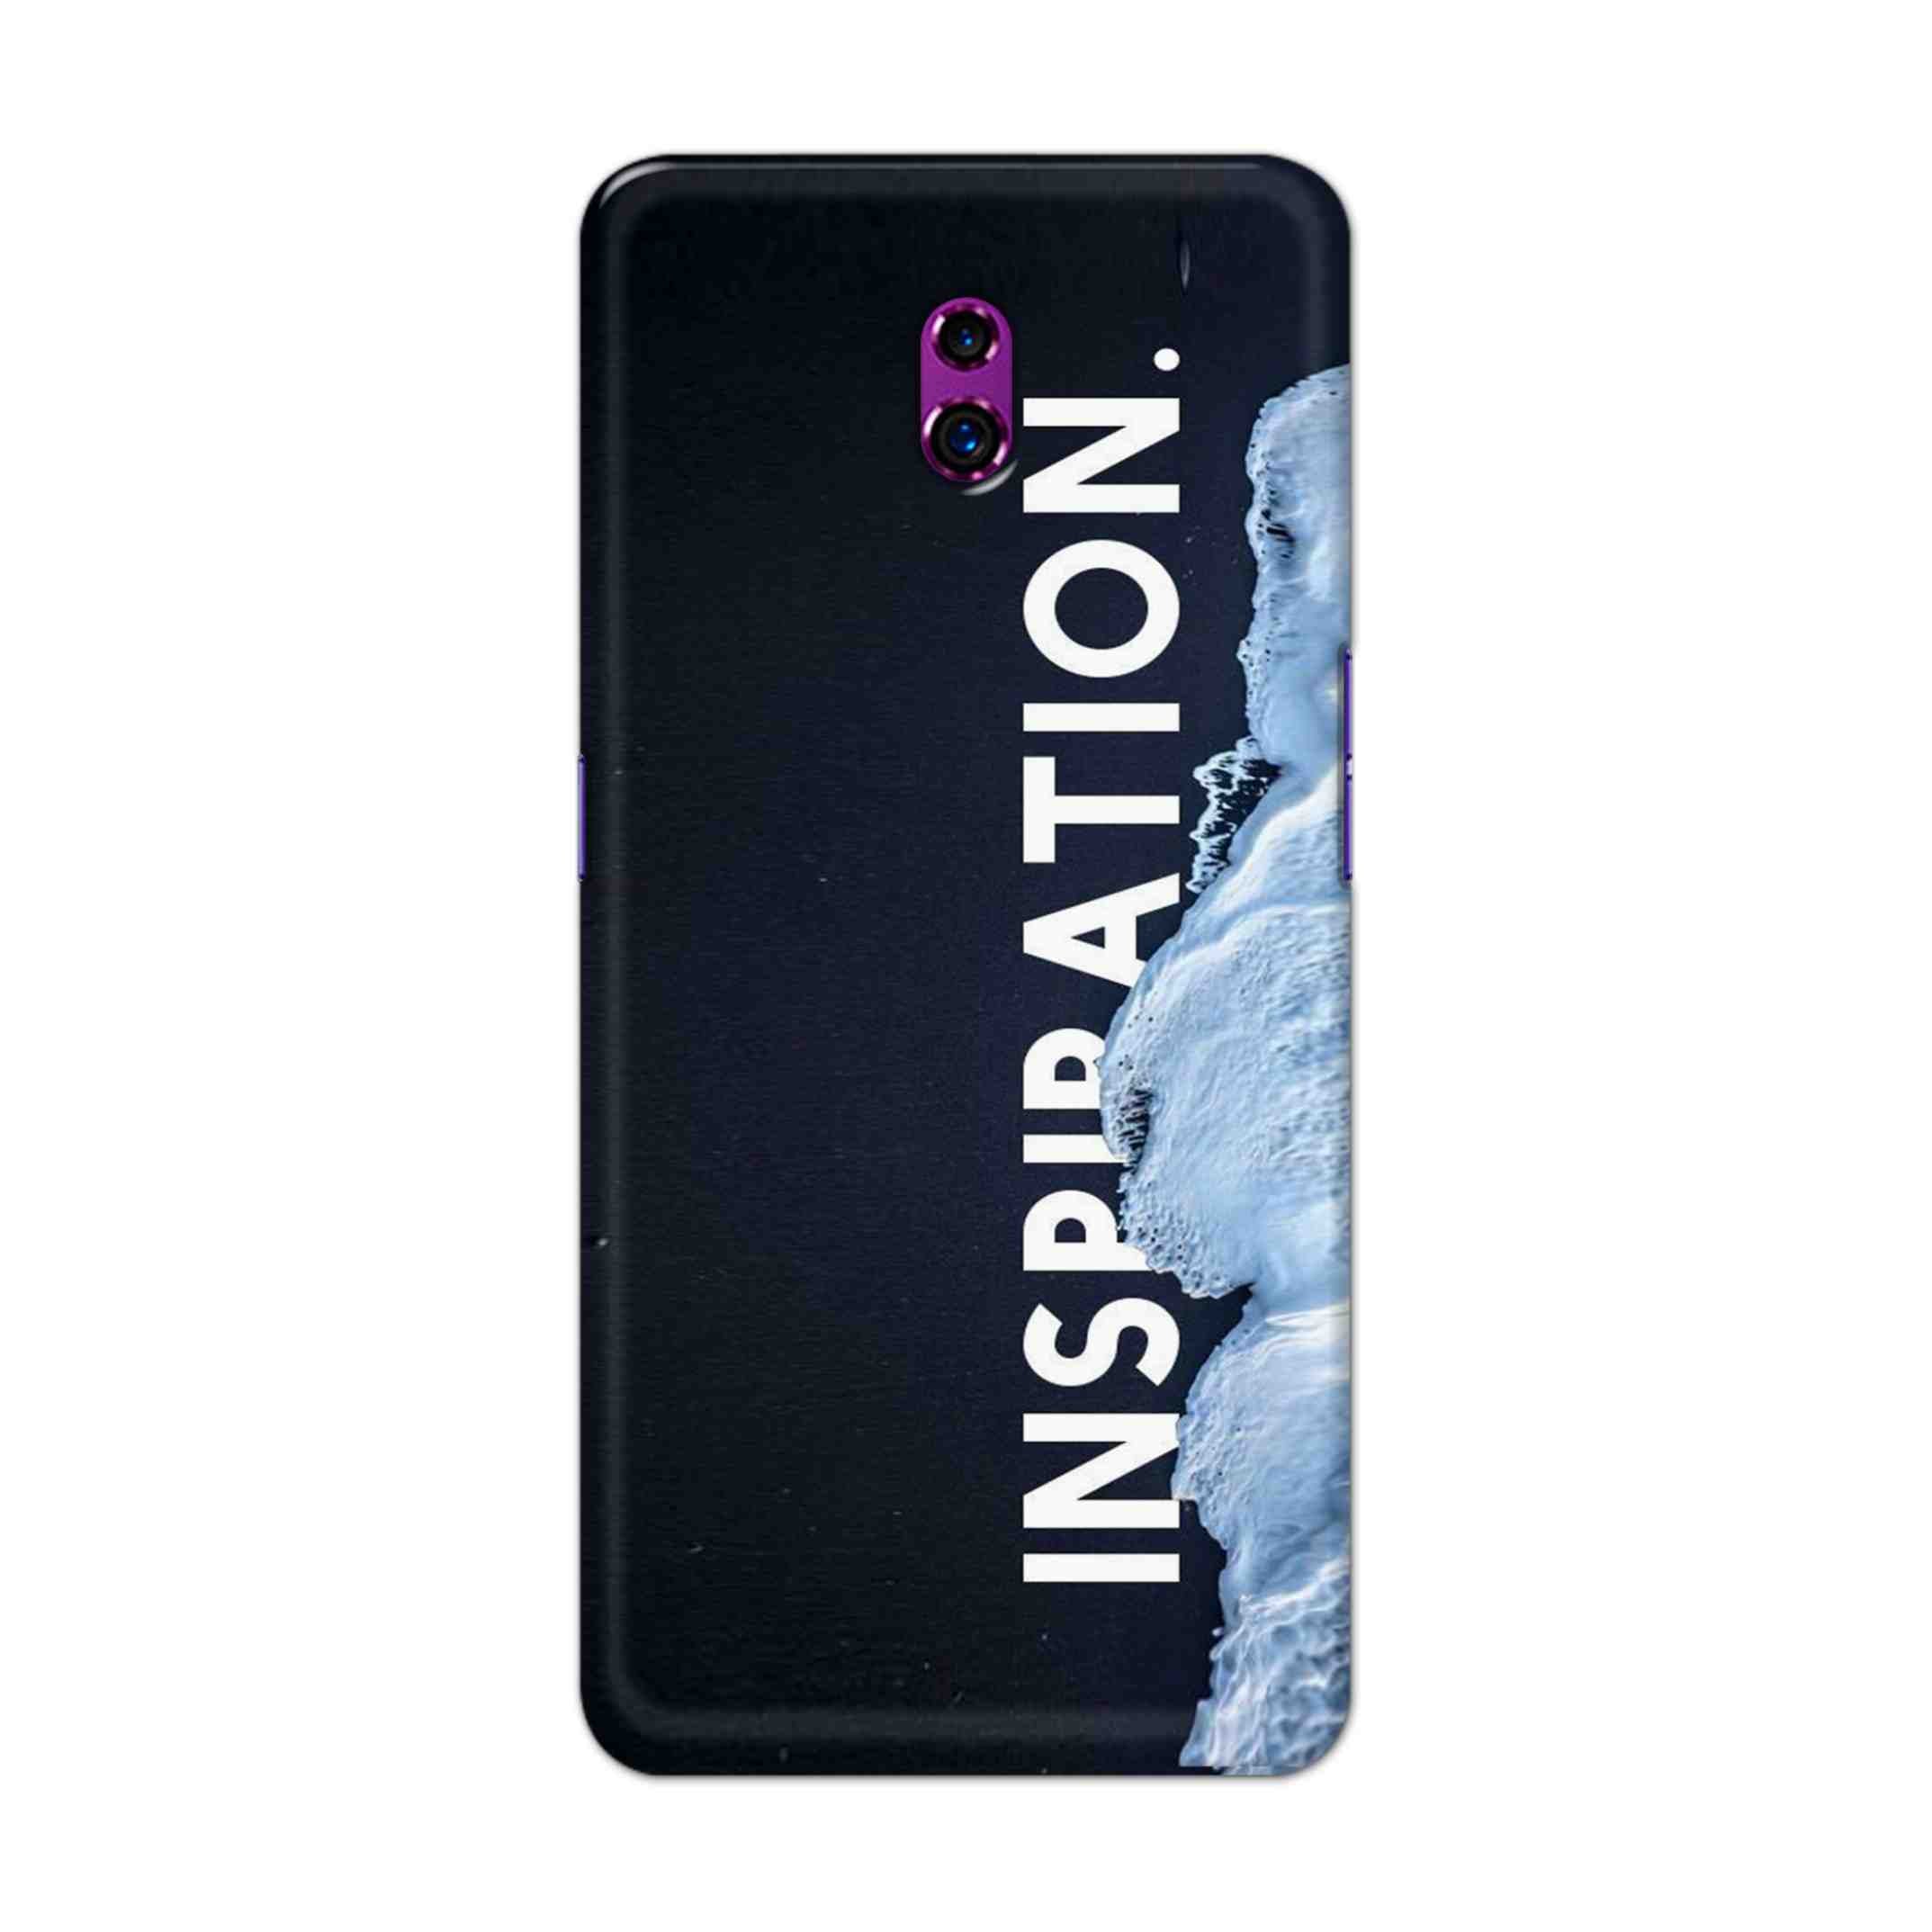 Buy Inspiration Hard Back Mobile Phone Case Cover For Oppo Reno Online